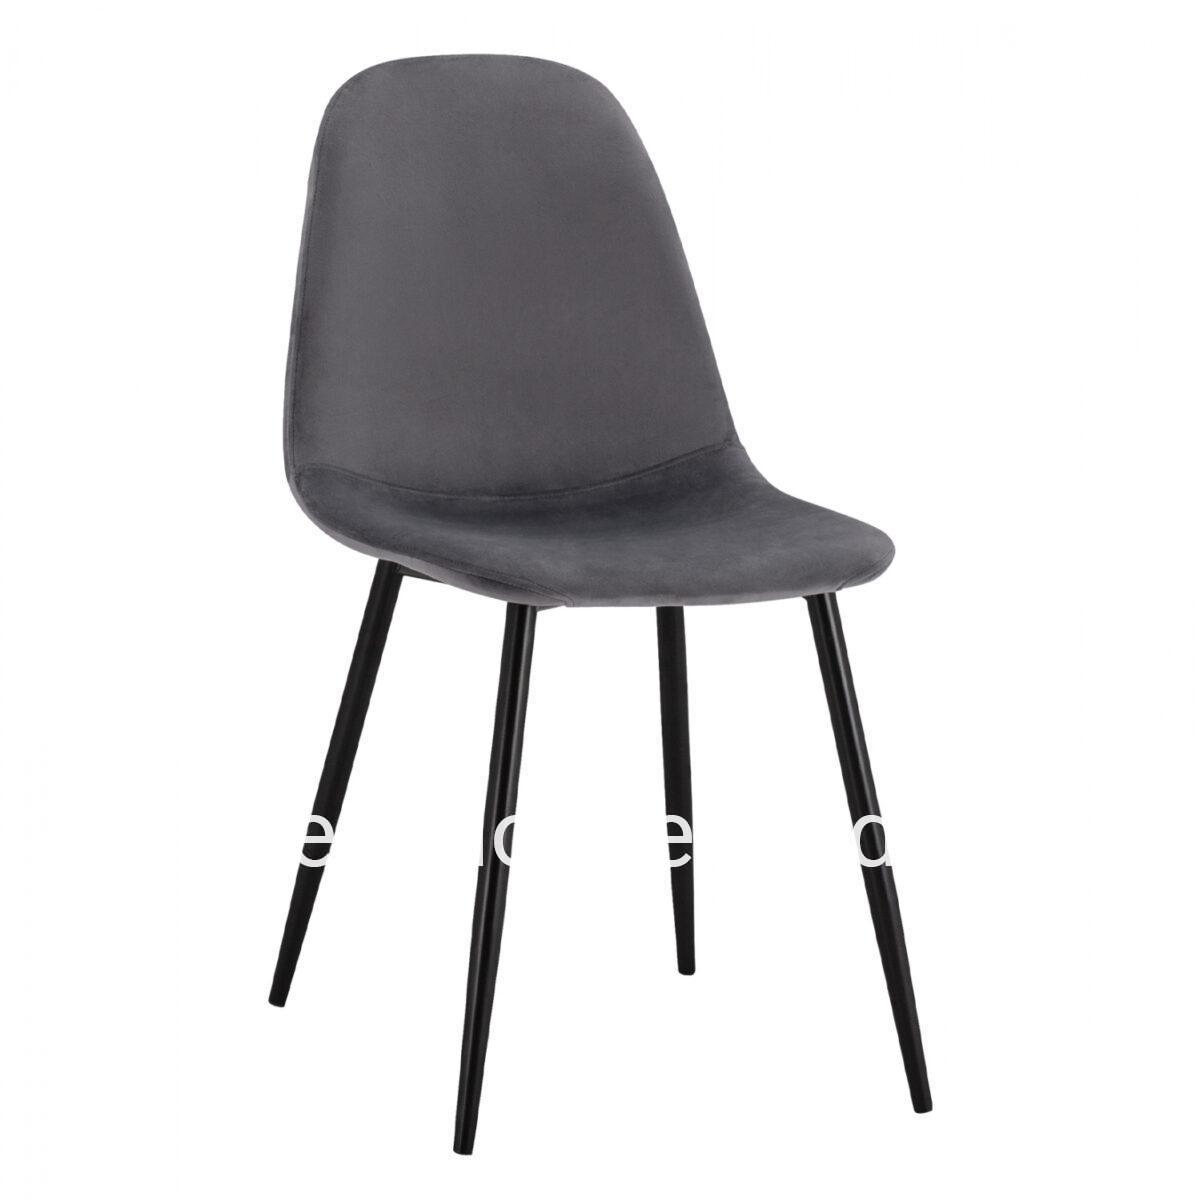 Dining Chair Leonardo Velvet Grey with metallic legs HM00100.01 45x53x85 cm.